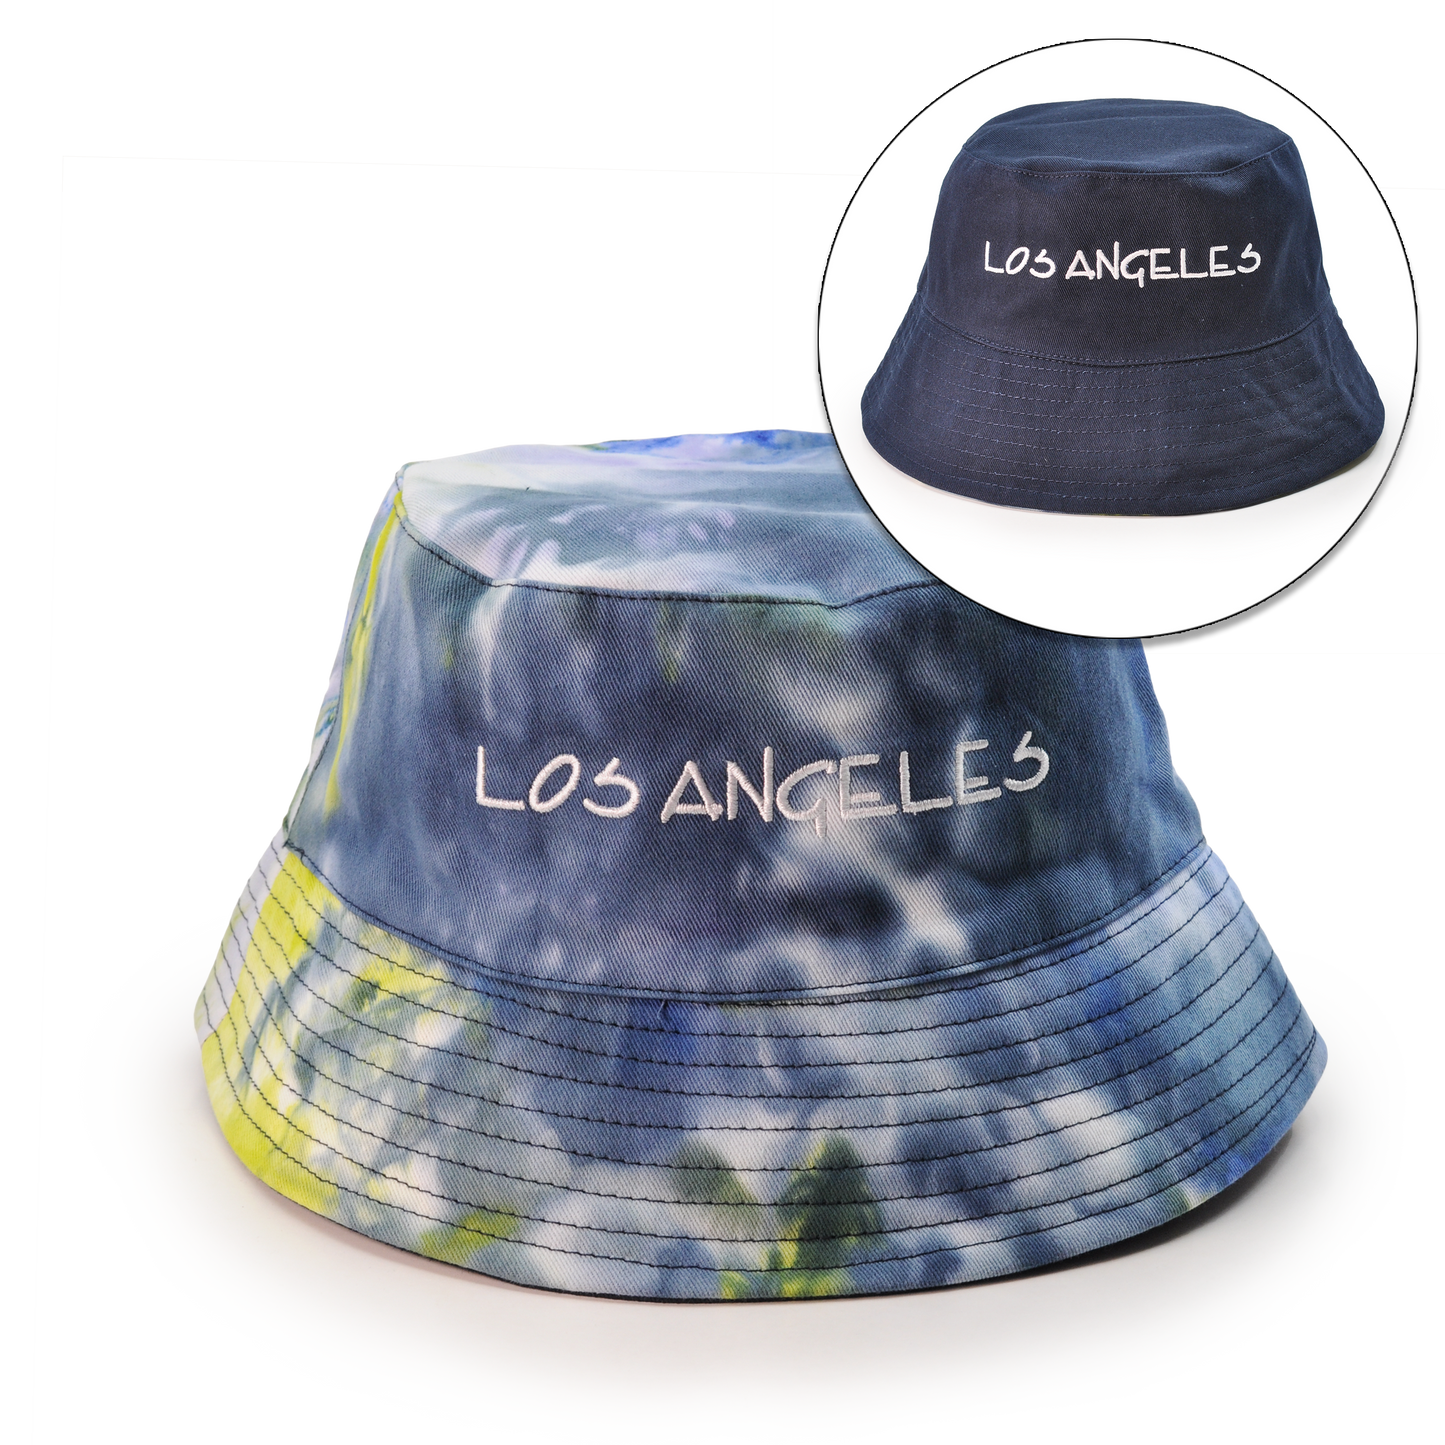 Reversible Your Beach City Unisex 100% Cotton Packable Summer Travel Bucket Beach Sun Hat Outdoor Cap. (Tie Dye Navy/Navy)